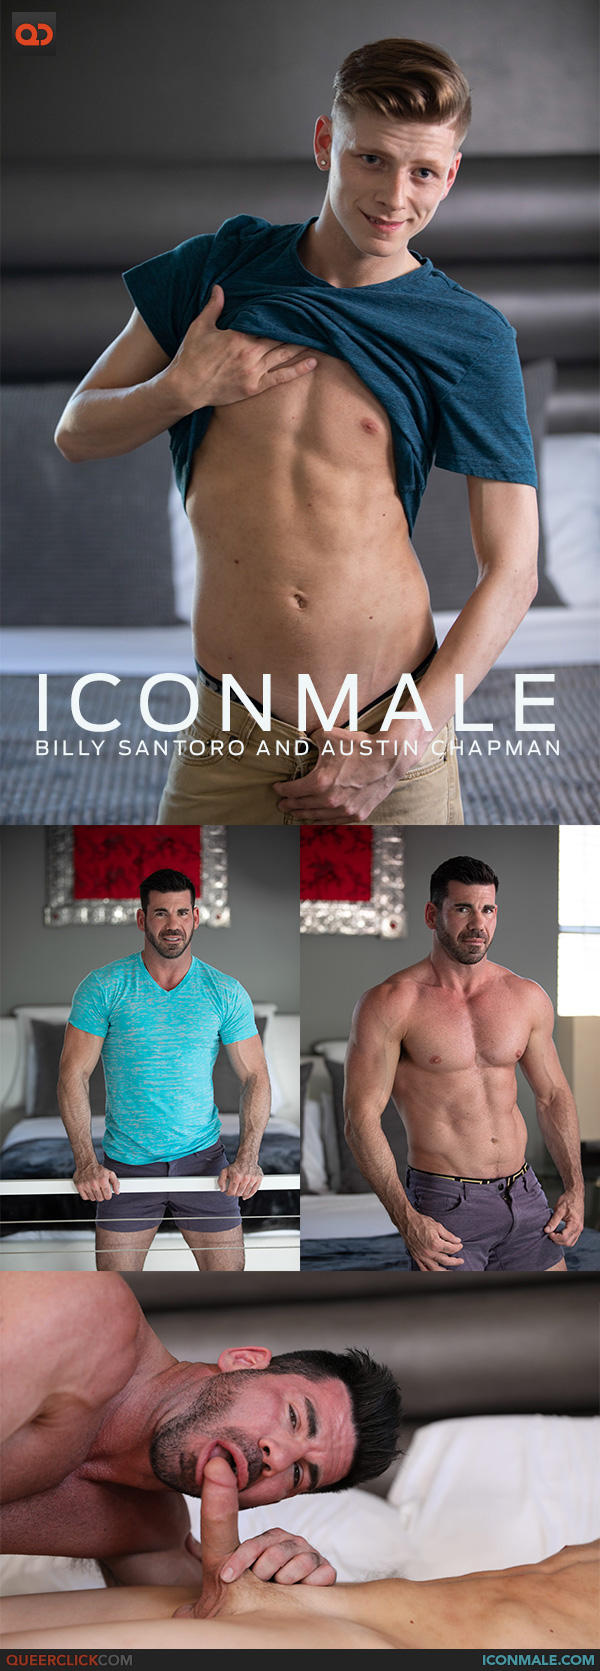 IconMale: Billy Santoro and Austin Chapman